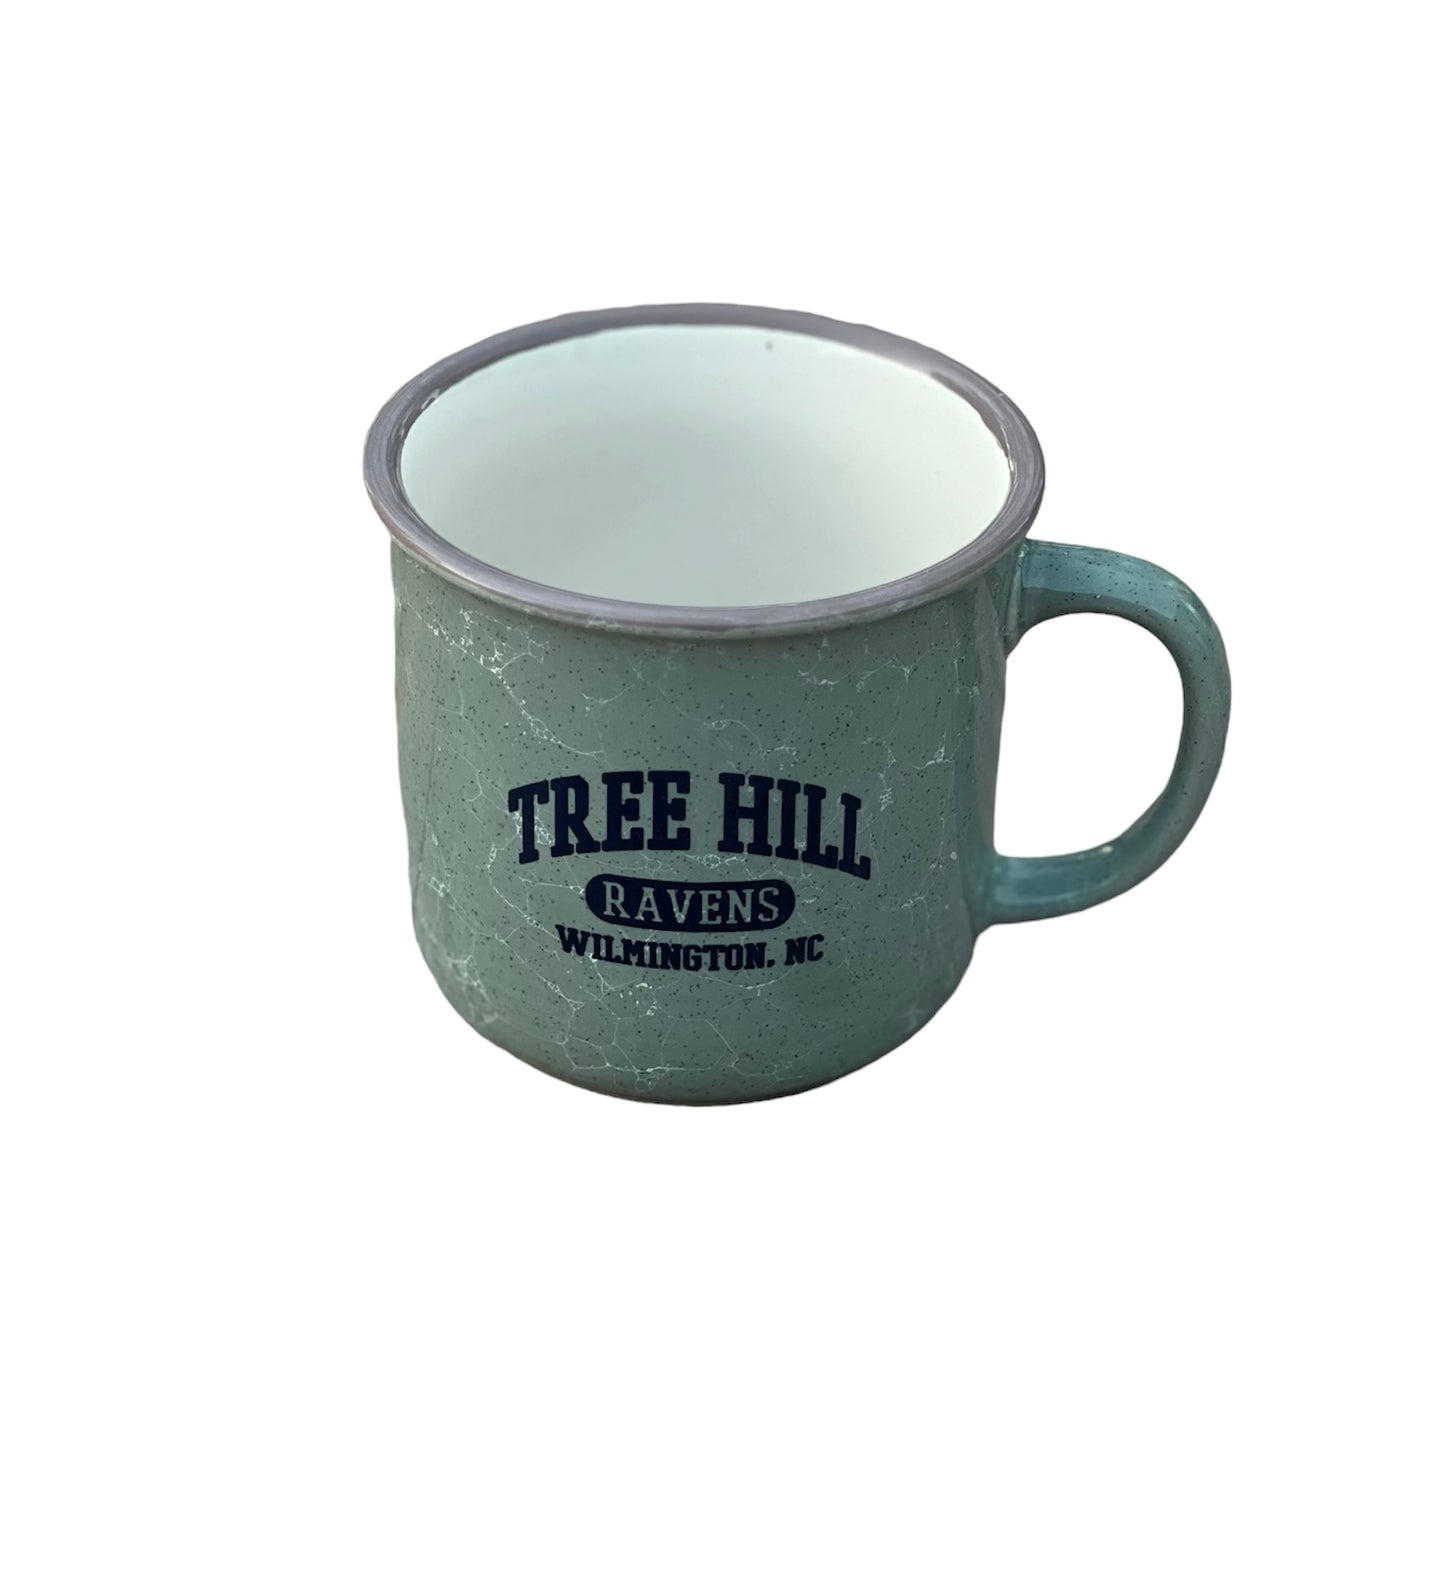 Tree Hill Ravens 3 Tier - Mug